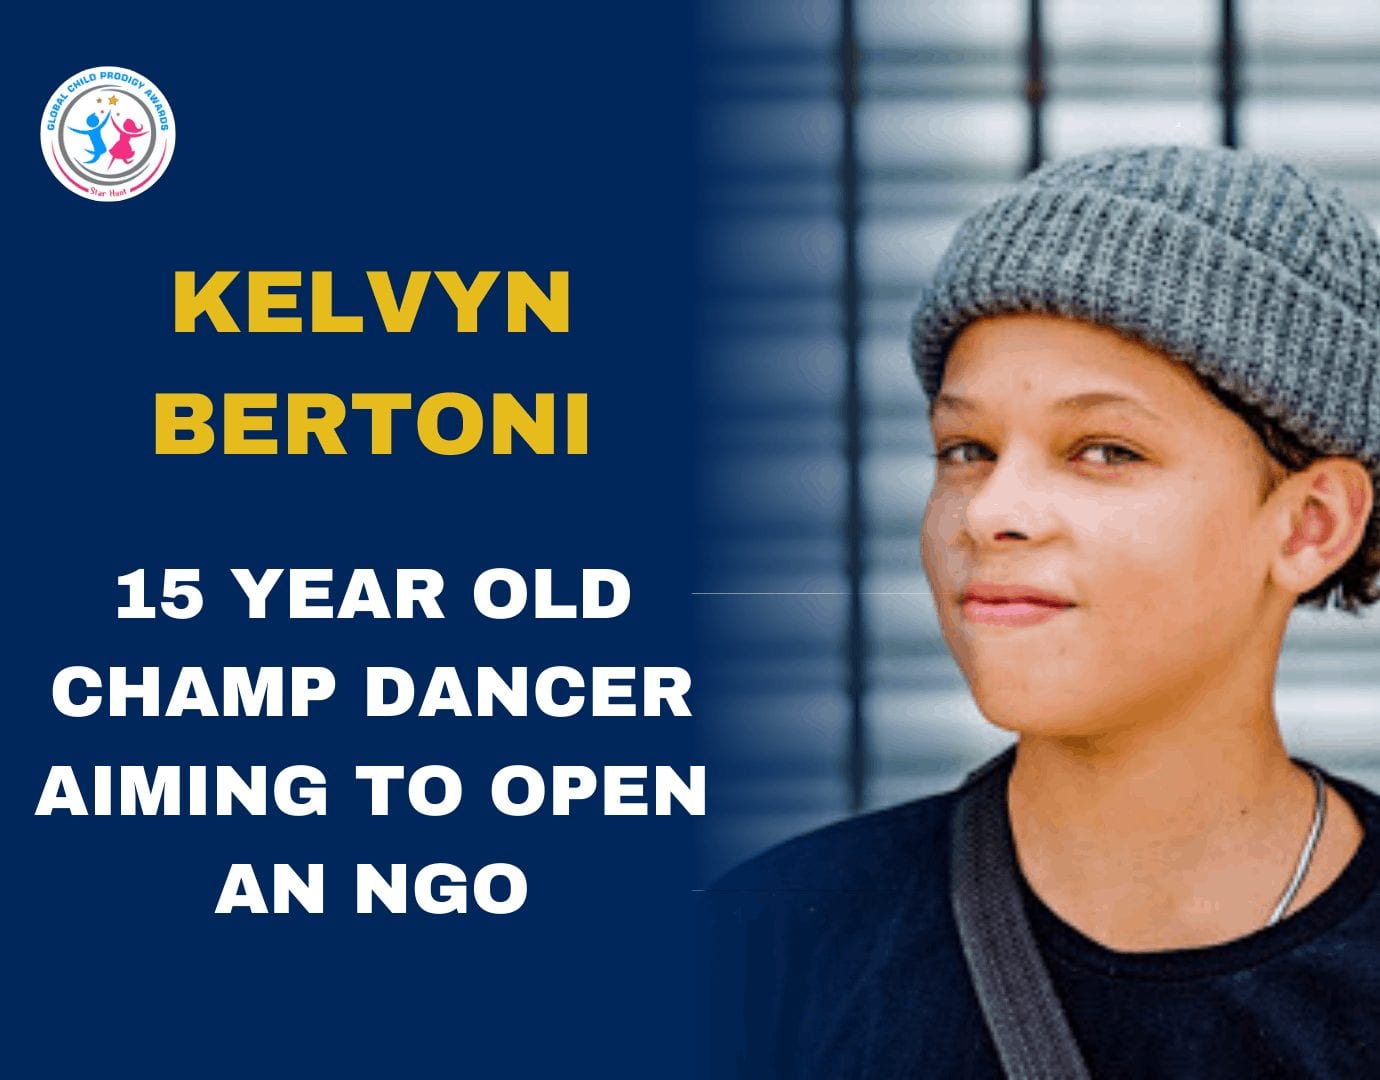 Meet the 15-year-old Dancer Champ - Kelvyn Bertoni